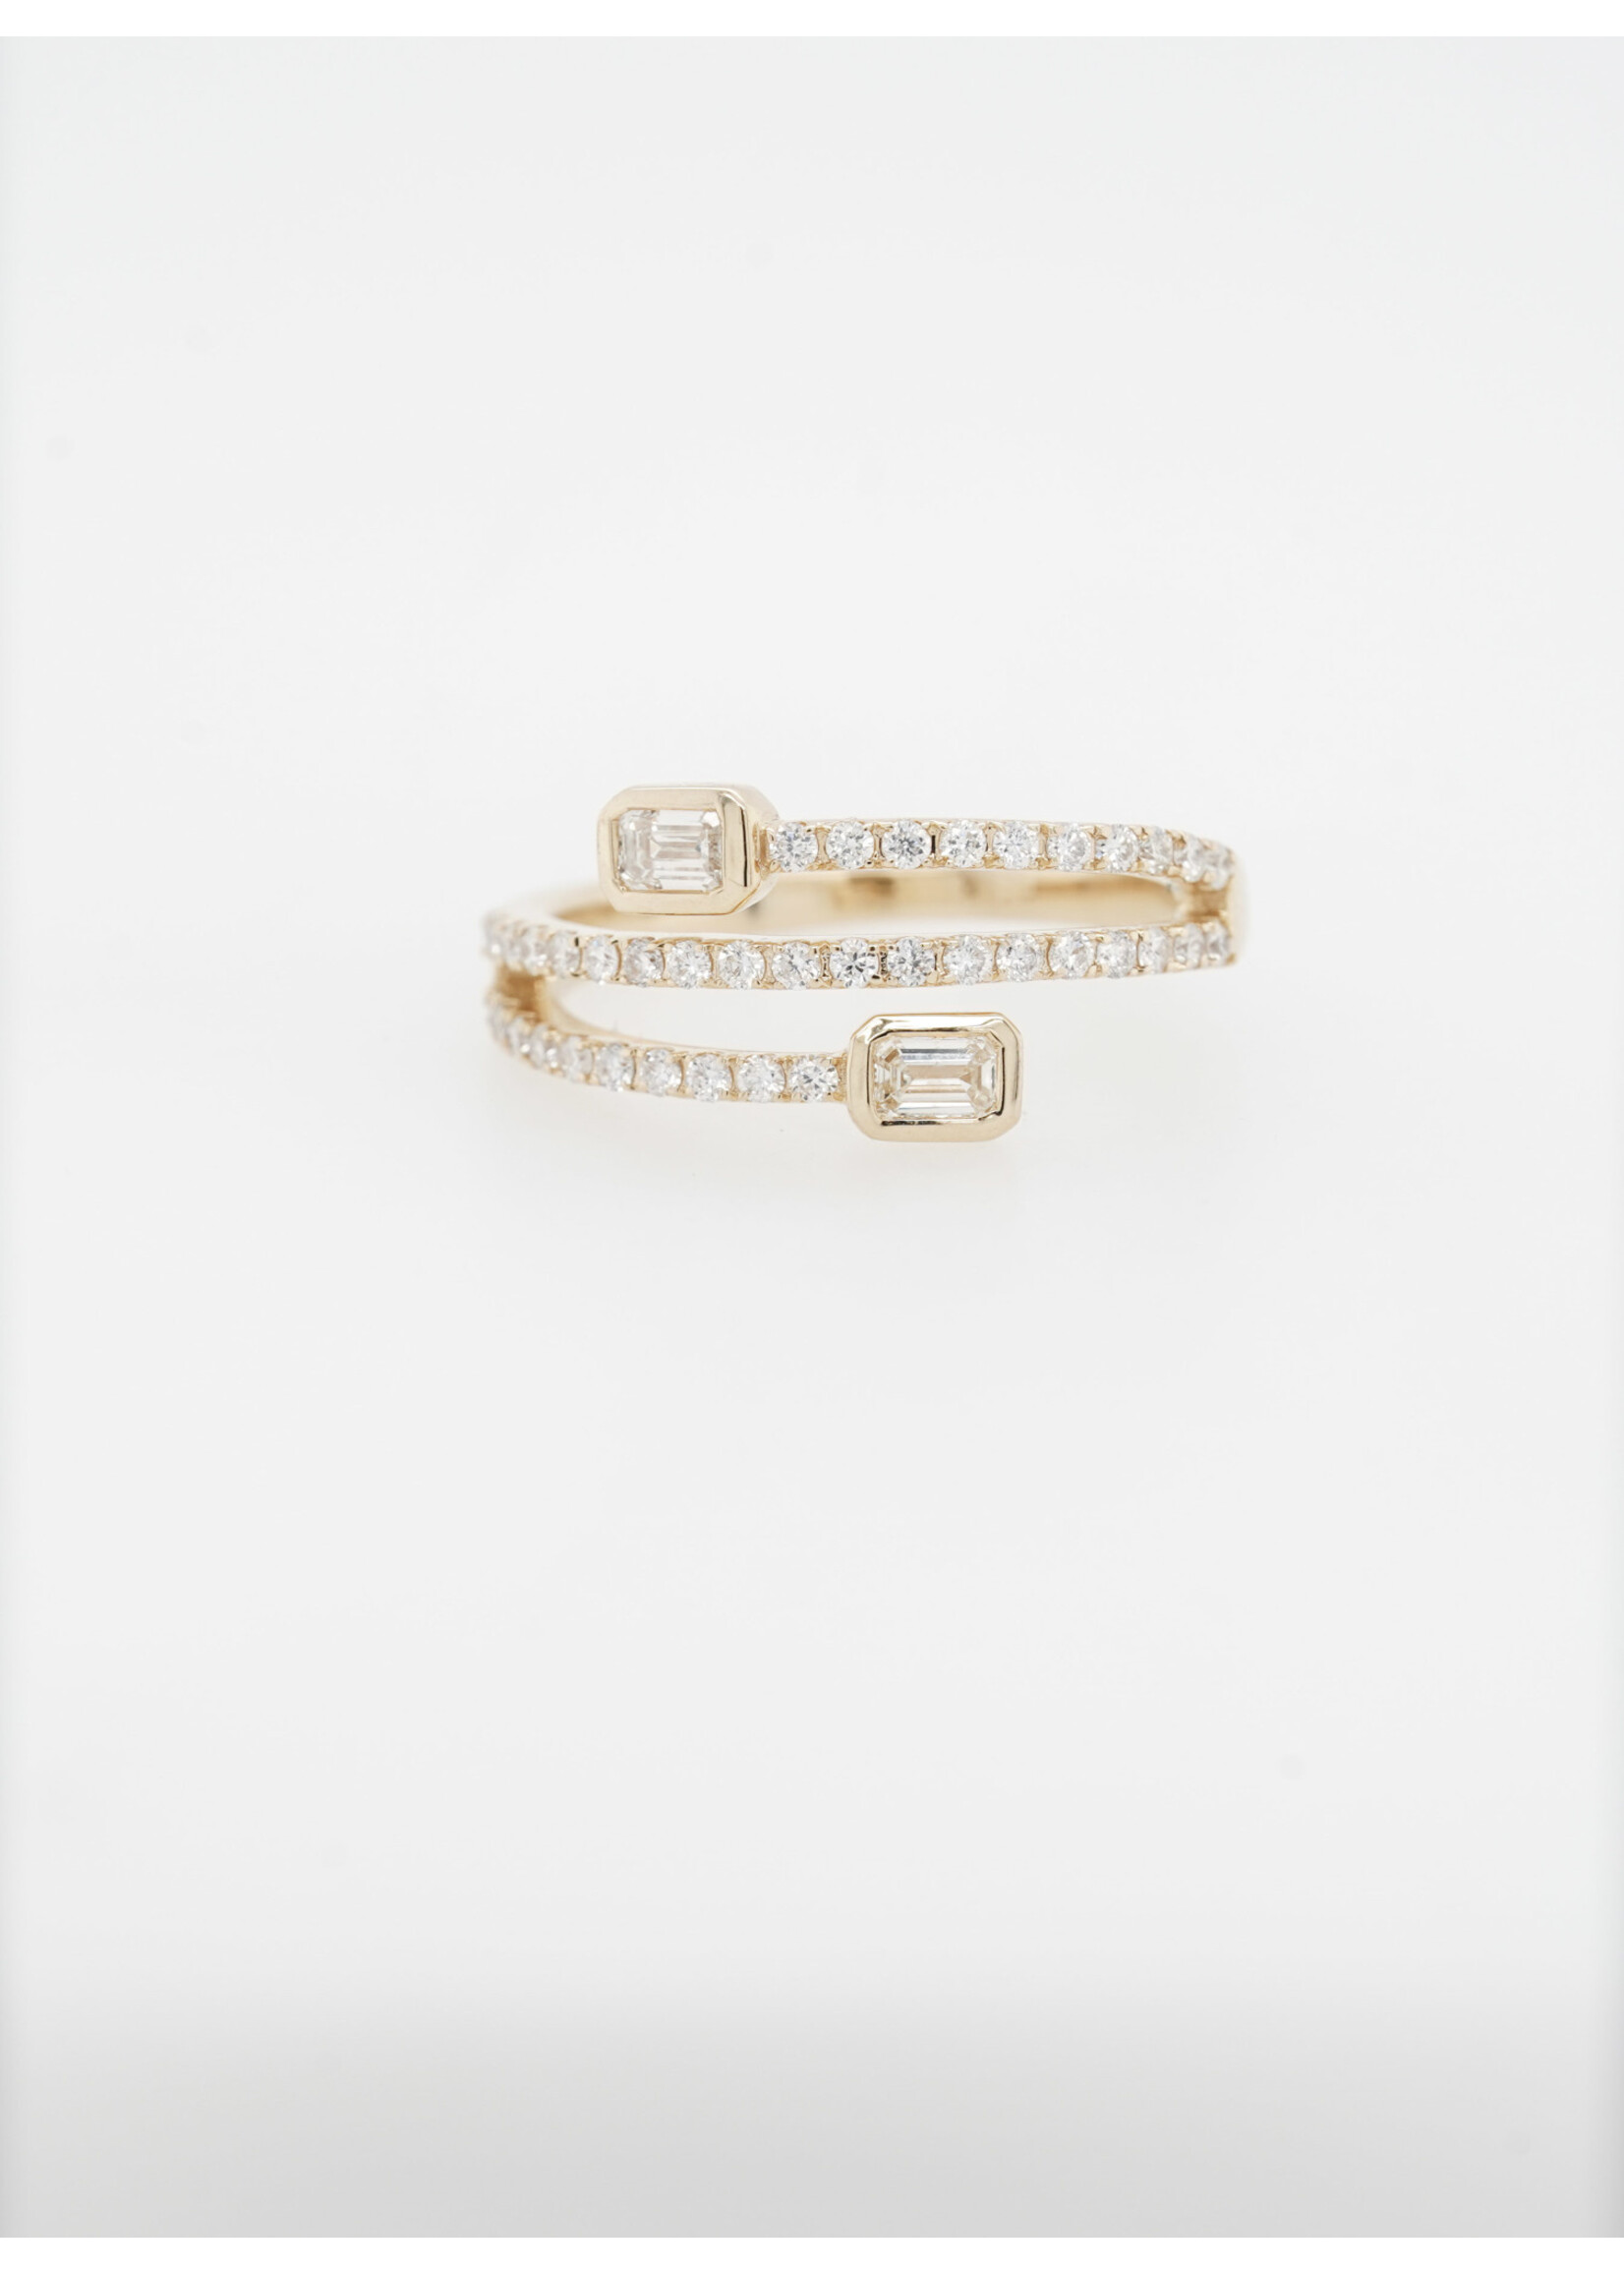 14KY 3.1g .80ctw Emerald Diamond Bypass Fashion Ring (size 7)